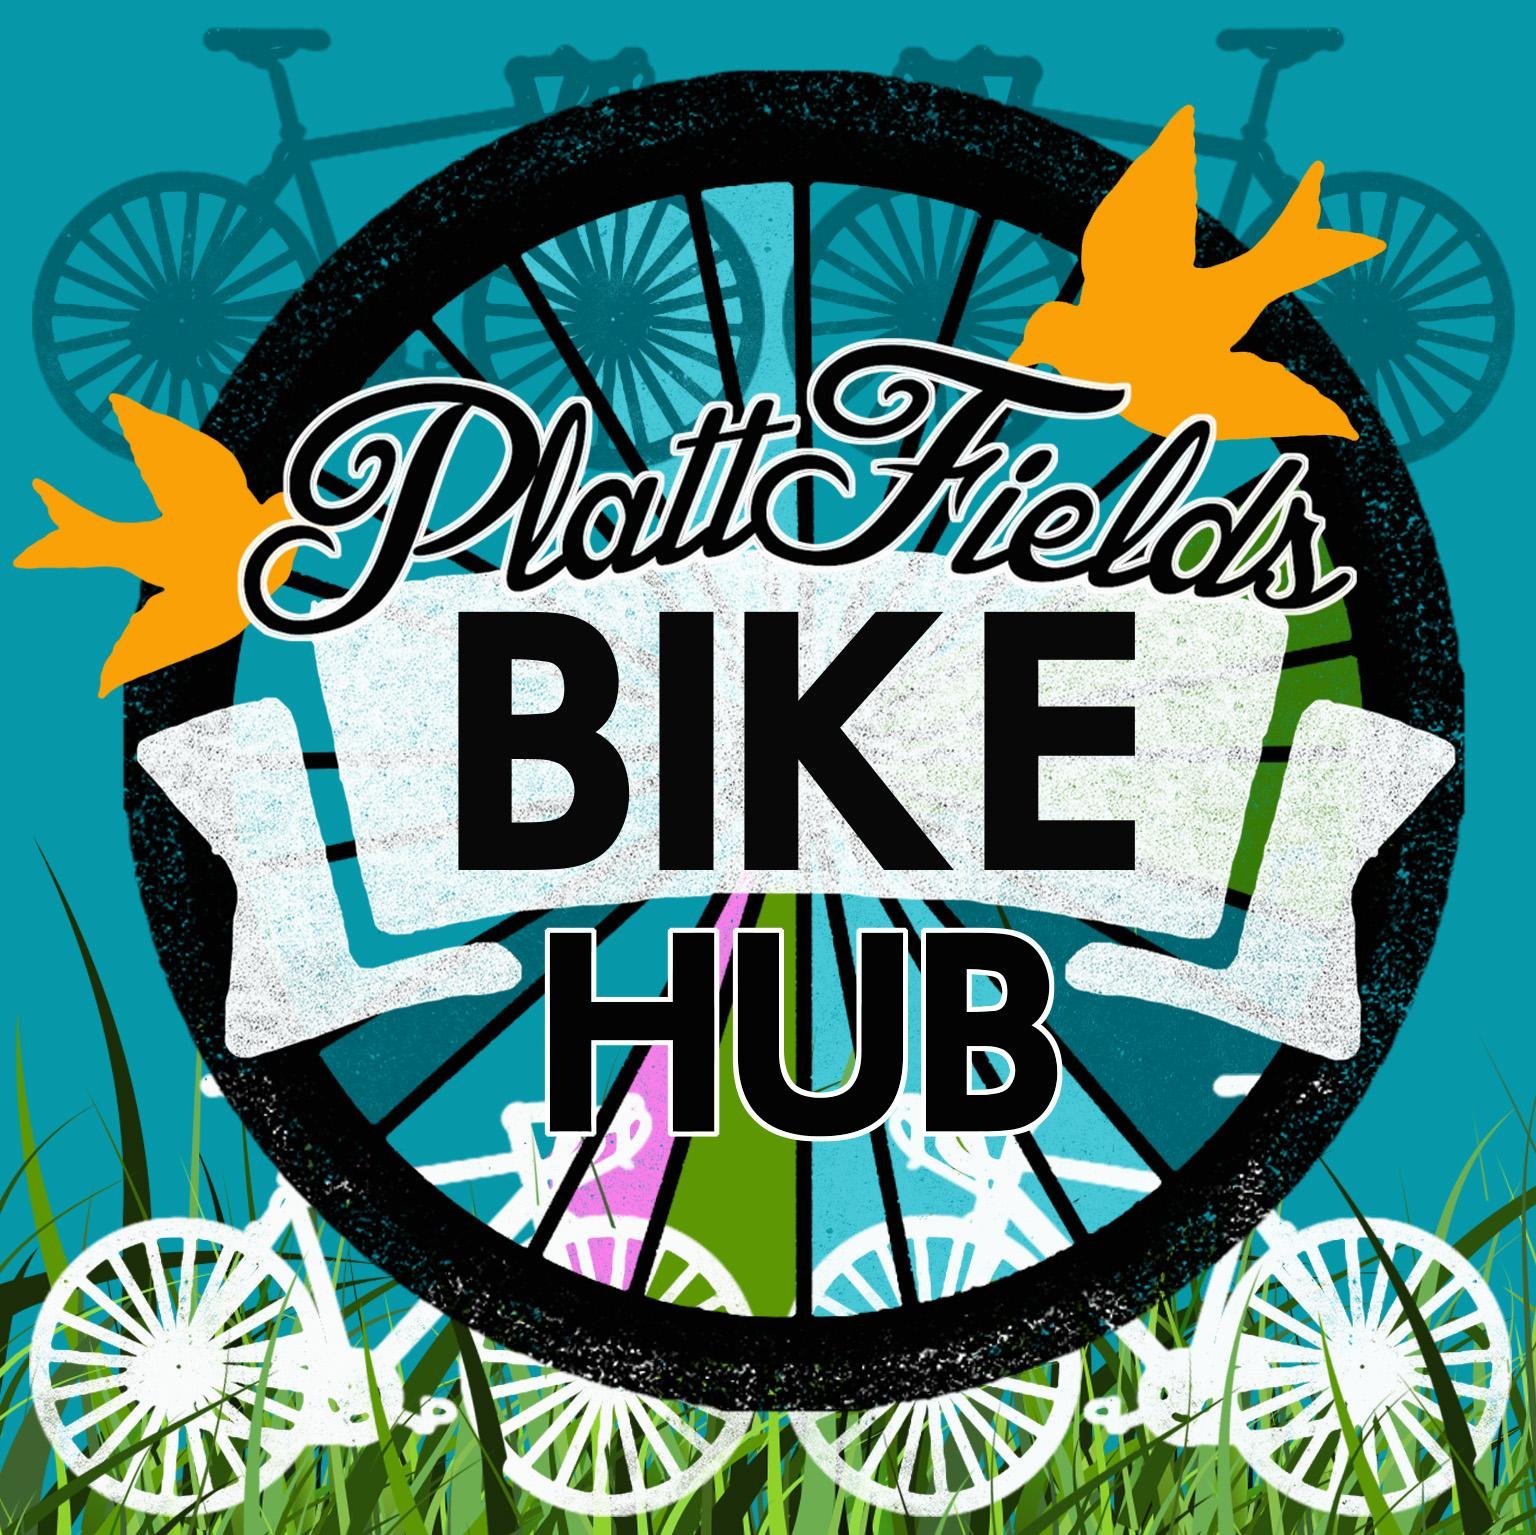 A community bike workshop for Platt Fields Park.
Based at The Boathouse - come get involved!
#plattfieldsBH 07419580023